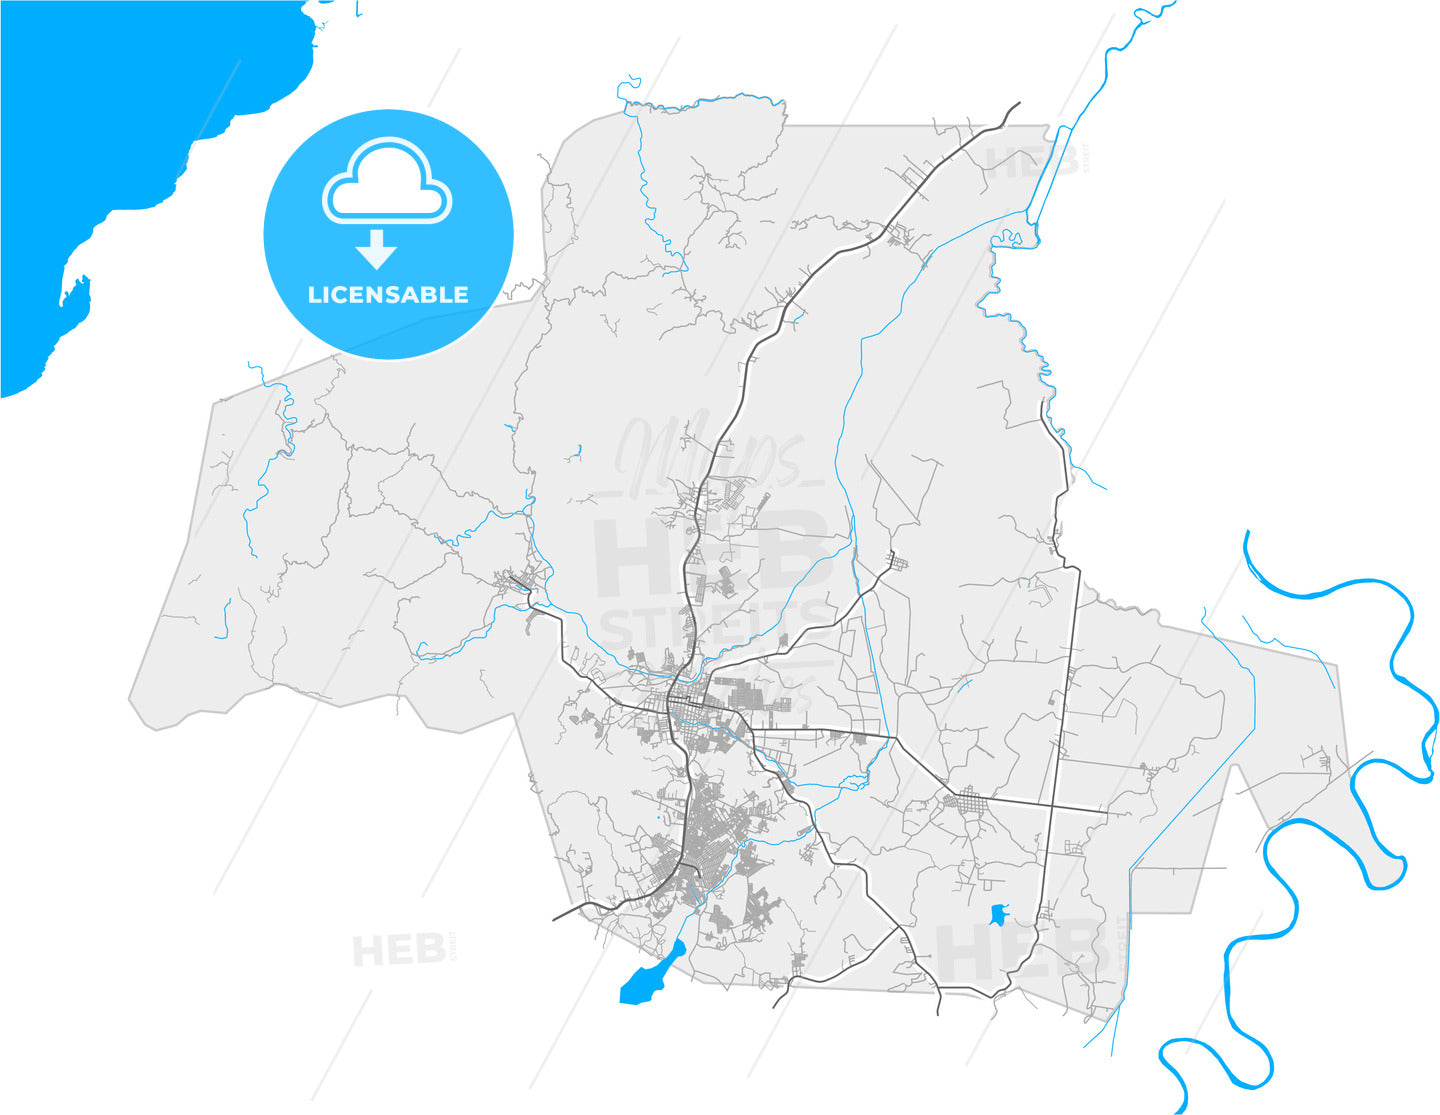 Choloma, Cortés, Honduras, high quality vector map